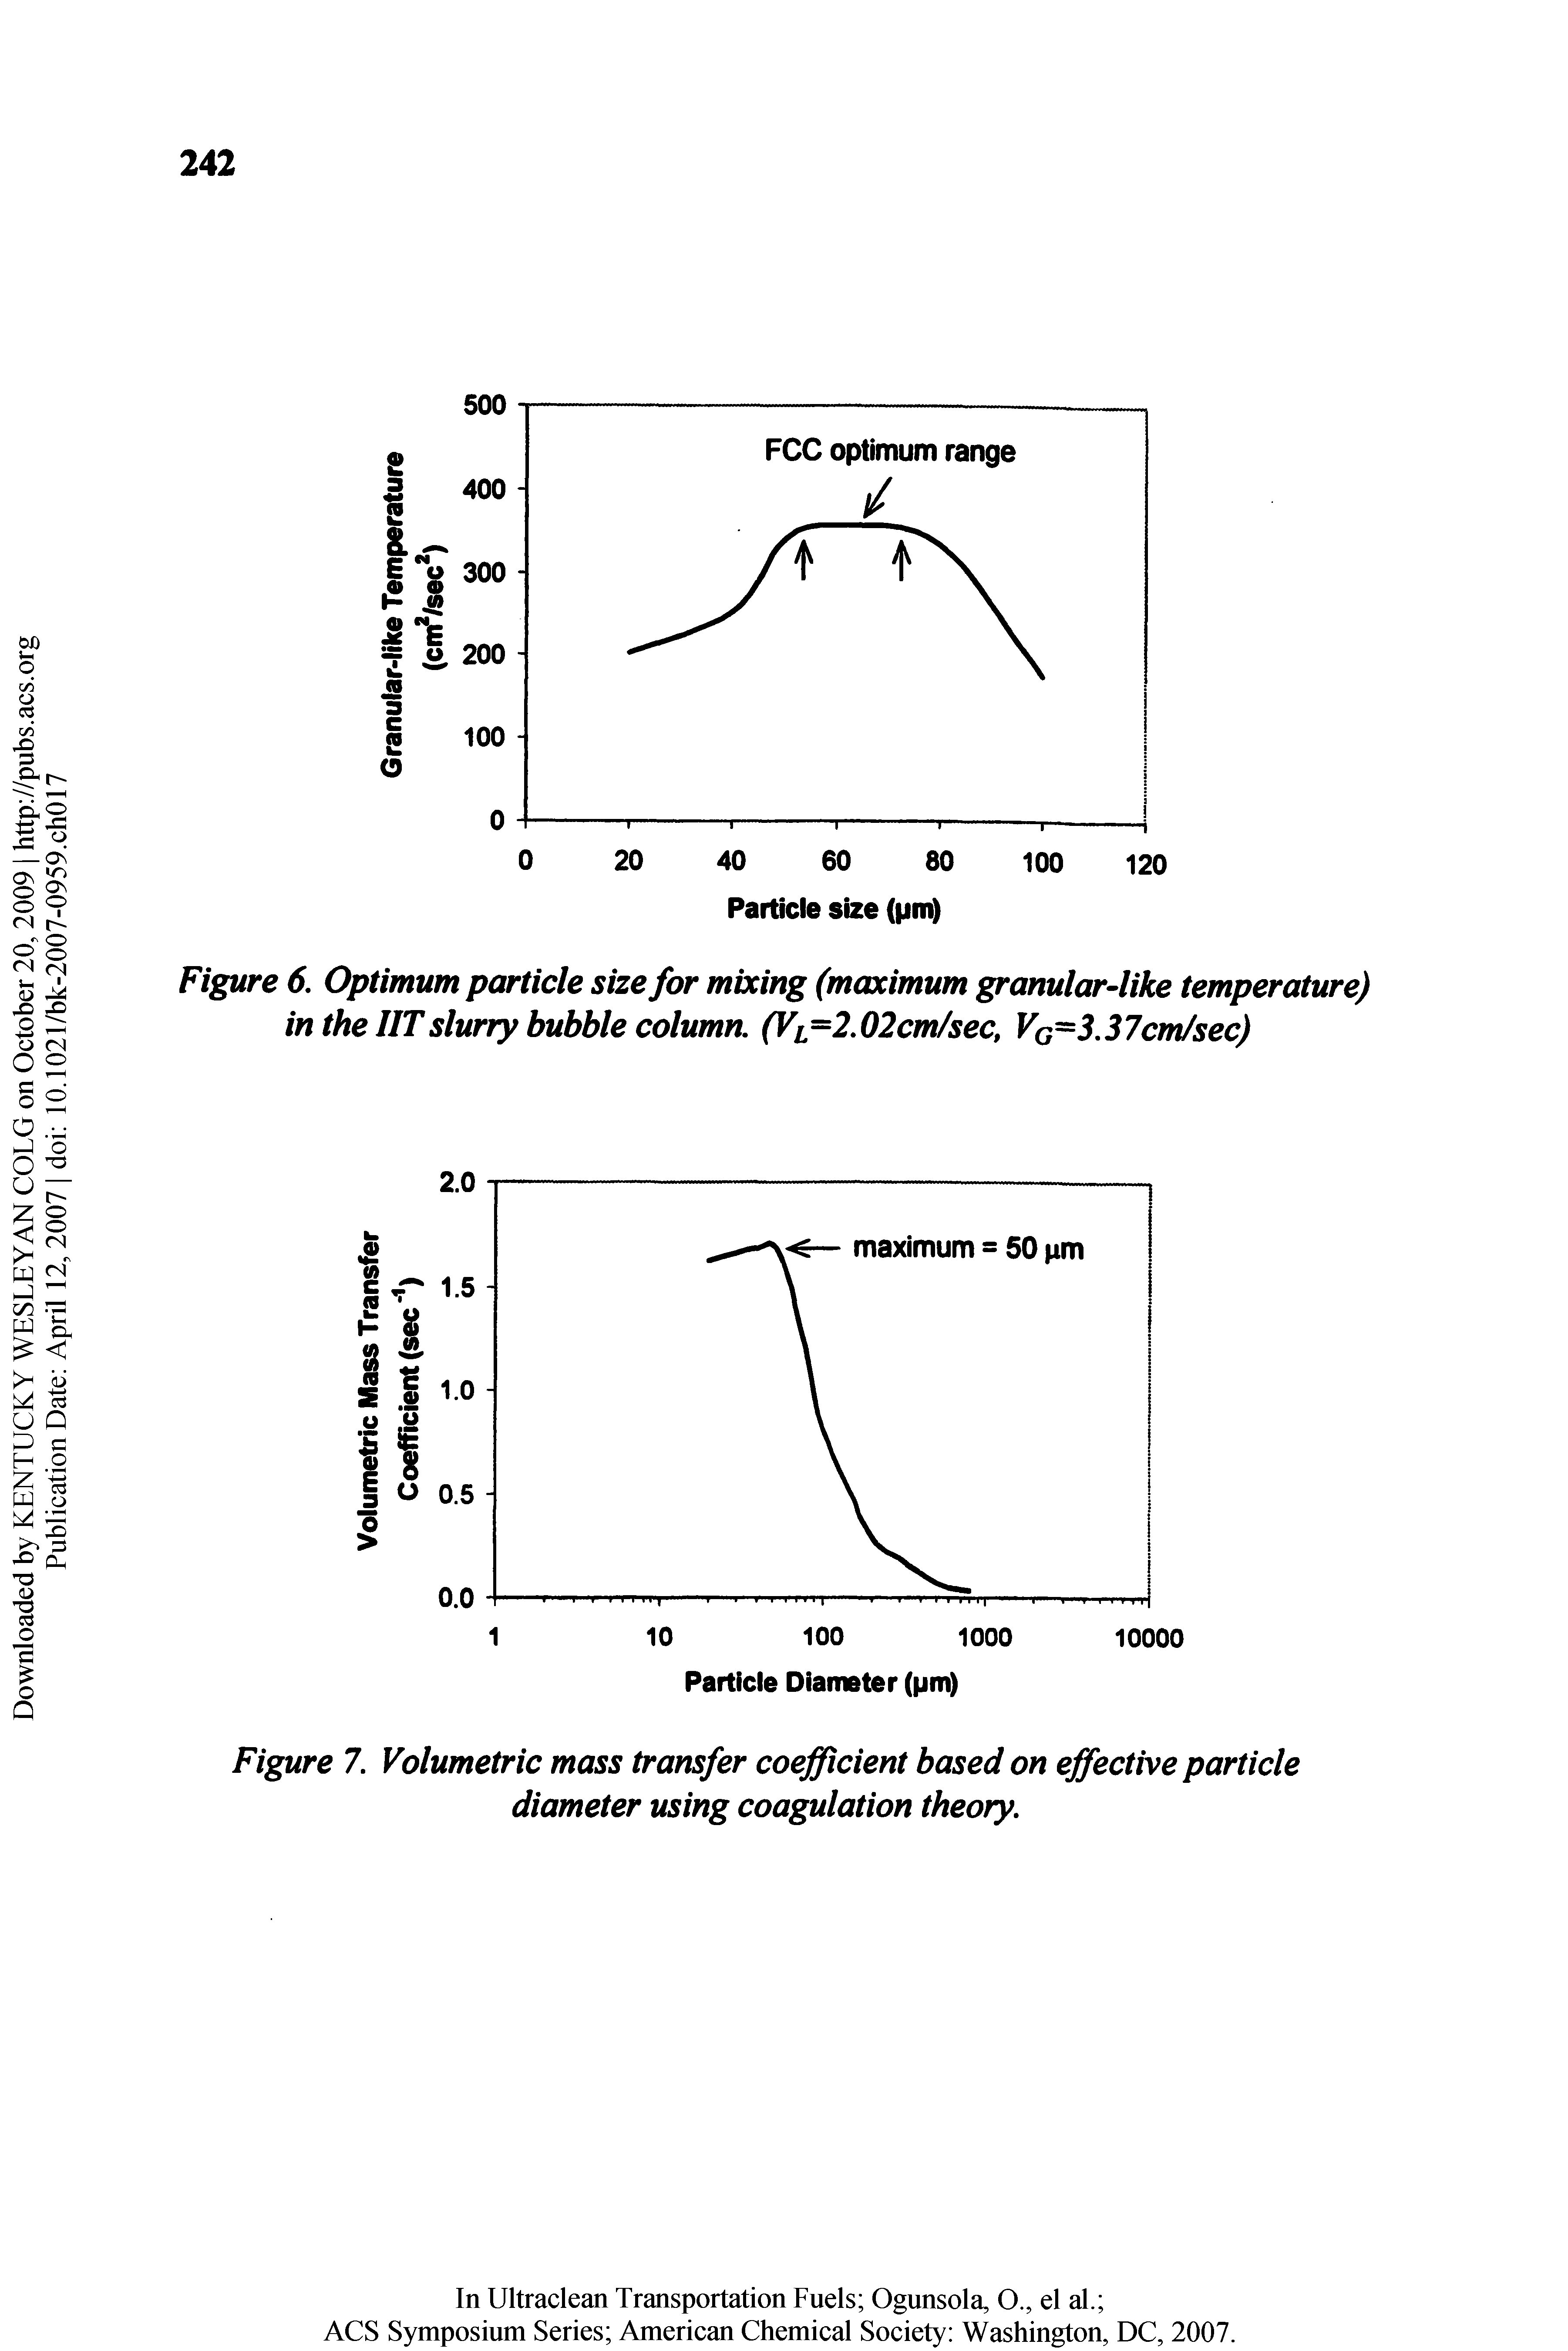 Figure 7. Volumetric mass transfer coefficient based on effective particle diameter using coagulation theory.